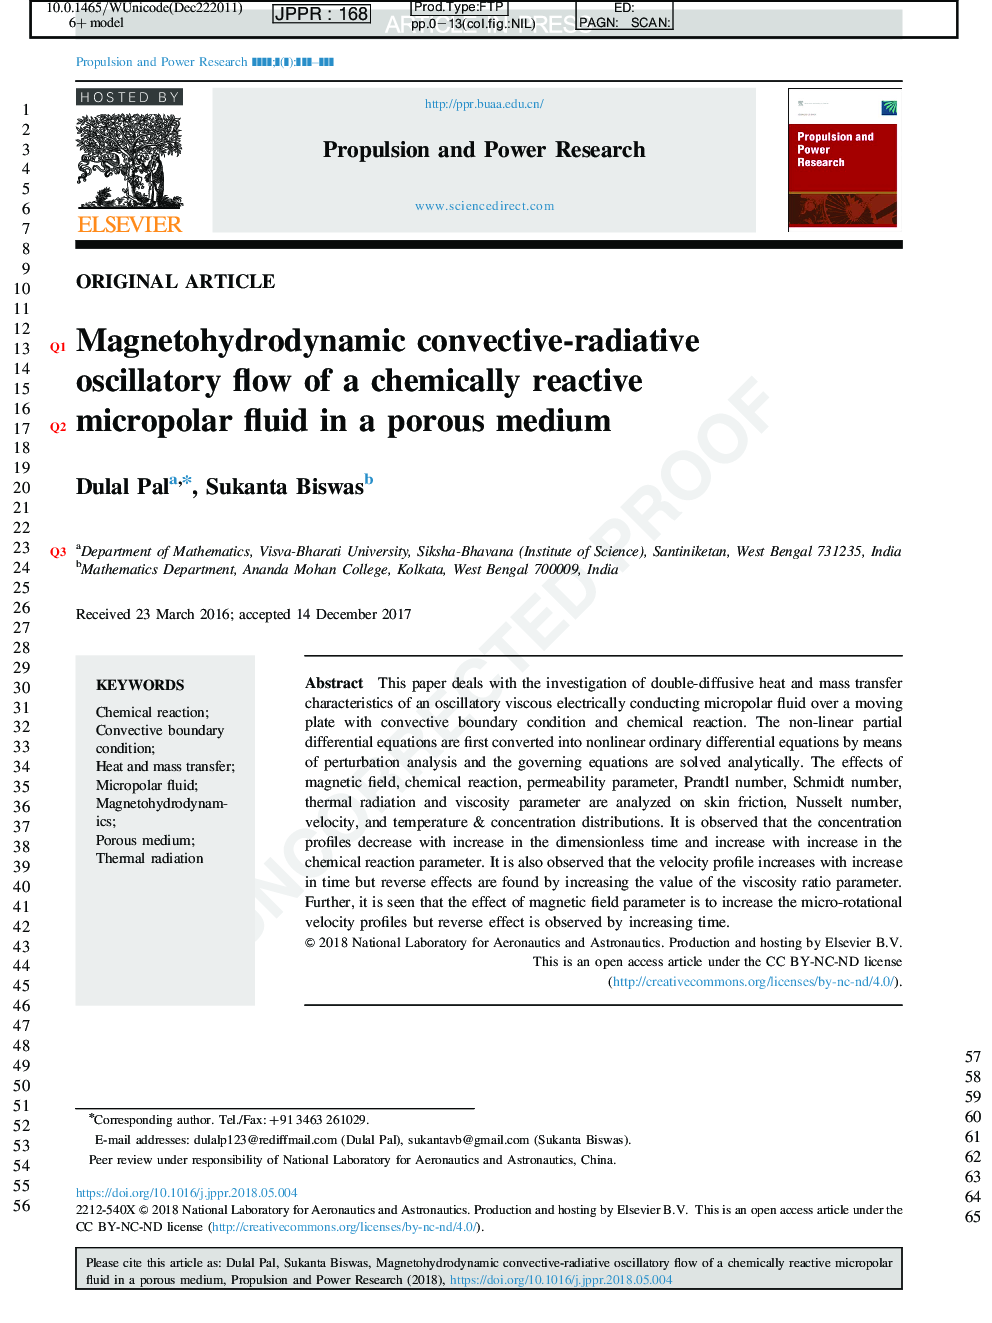 Magnetohydrodynamic convective-radiative oscillatory flow of a chemically reactive micropolar fluid in a porous medium